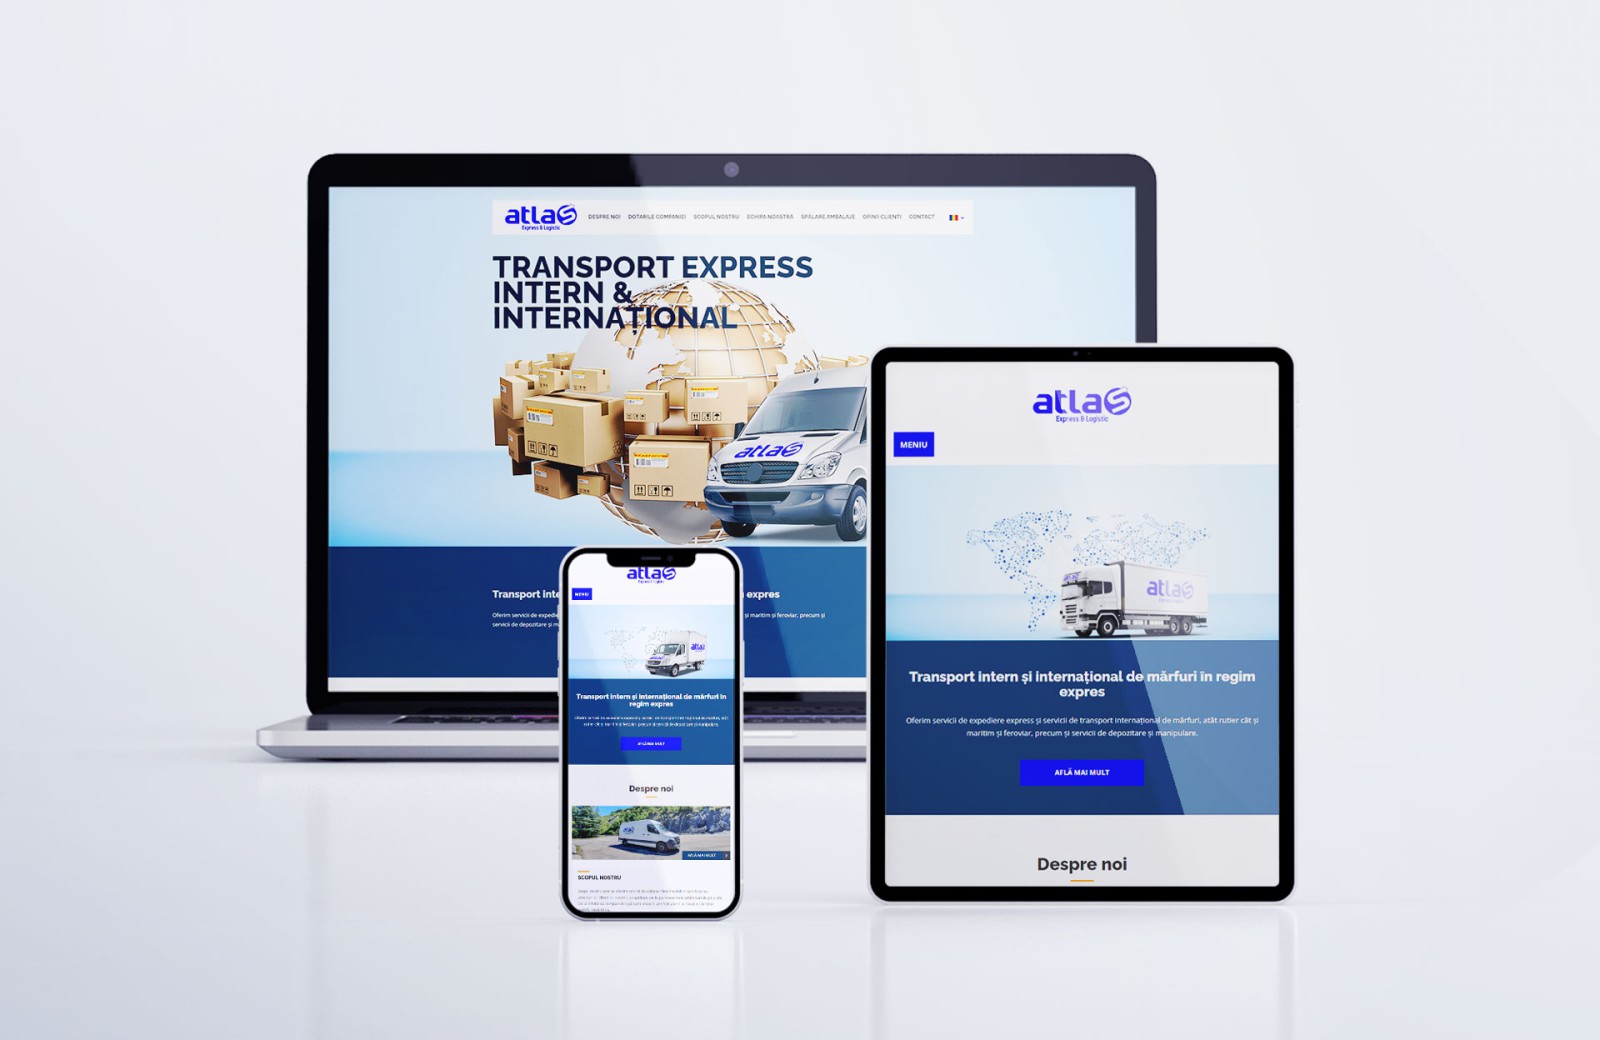 Site web de prezentare atlastransporte.ro